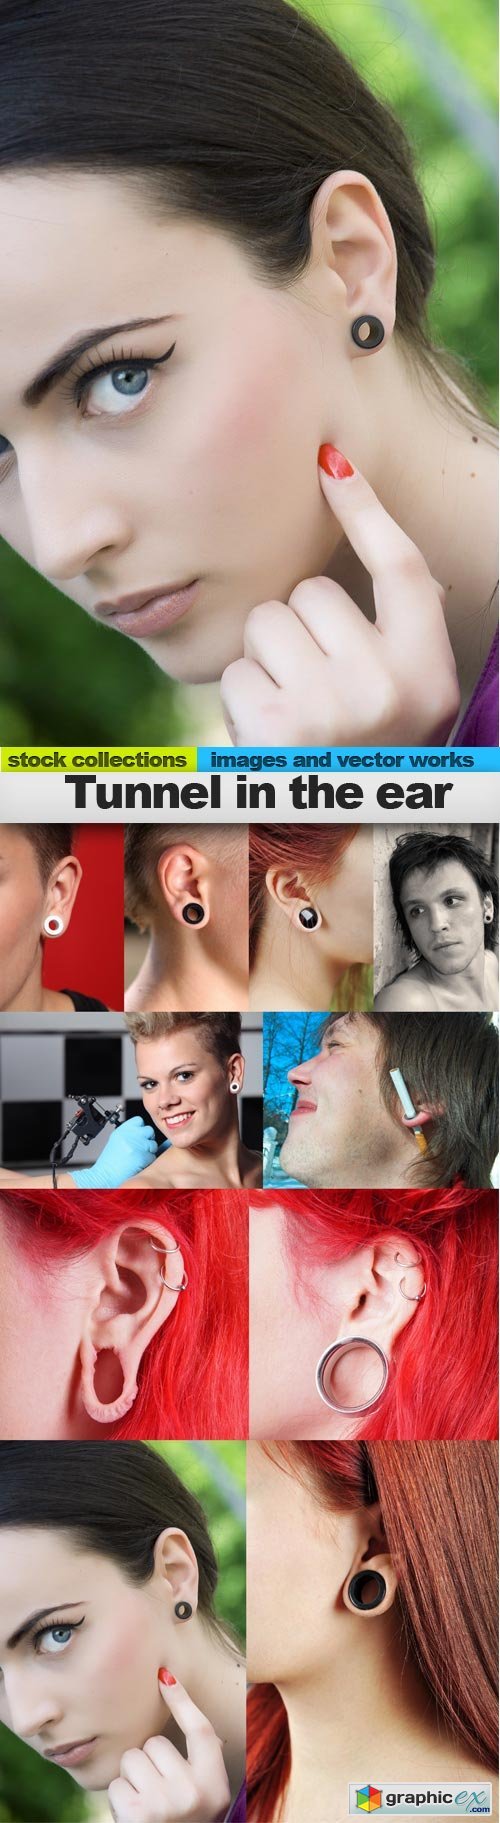 Tunnel in the ear, 10 x UHQ JPEG